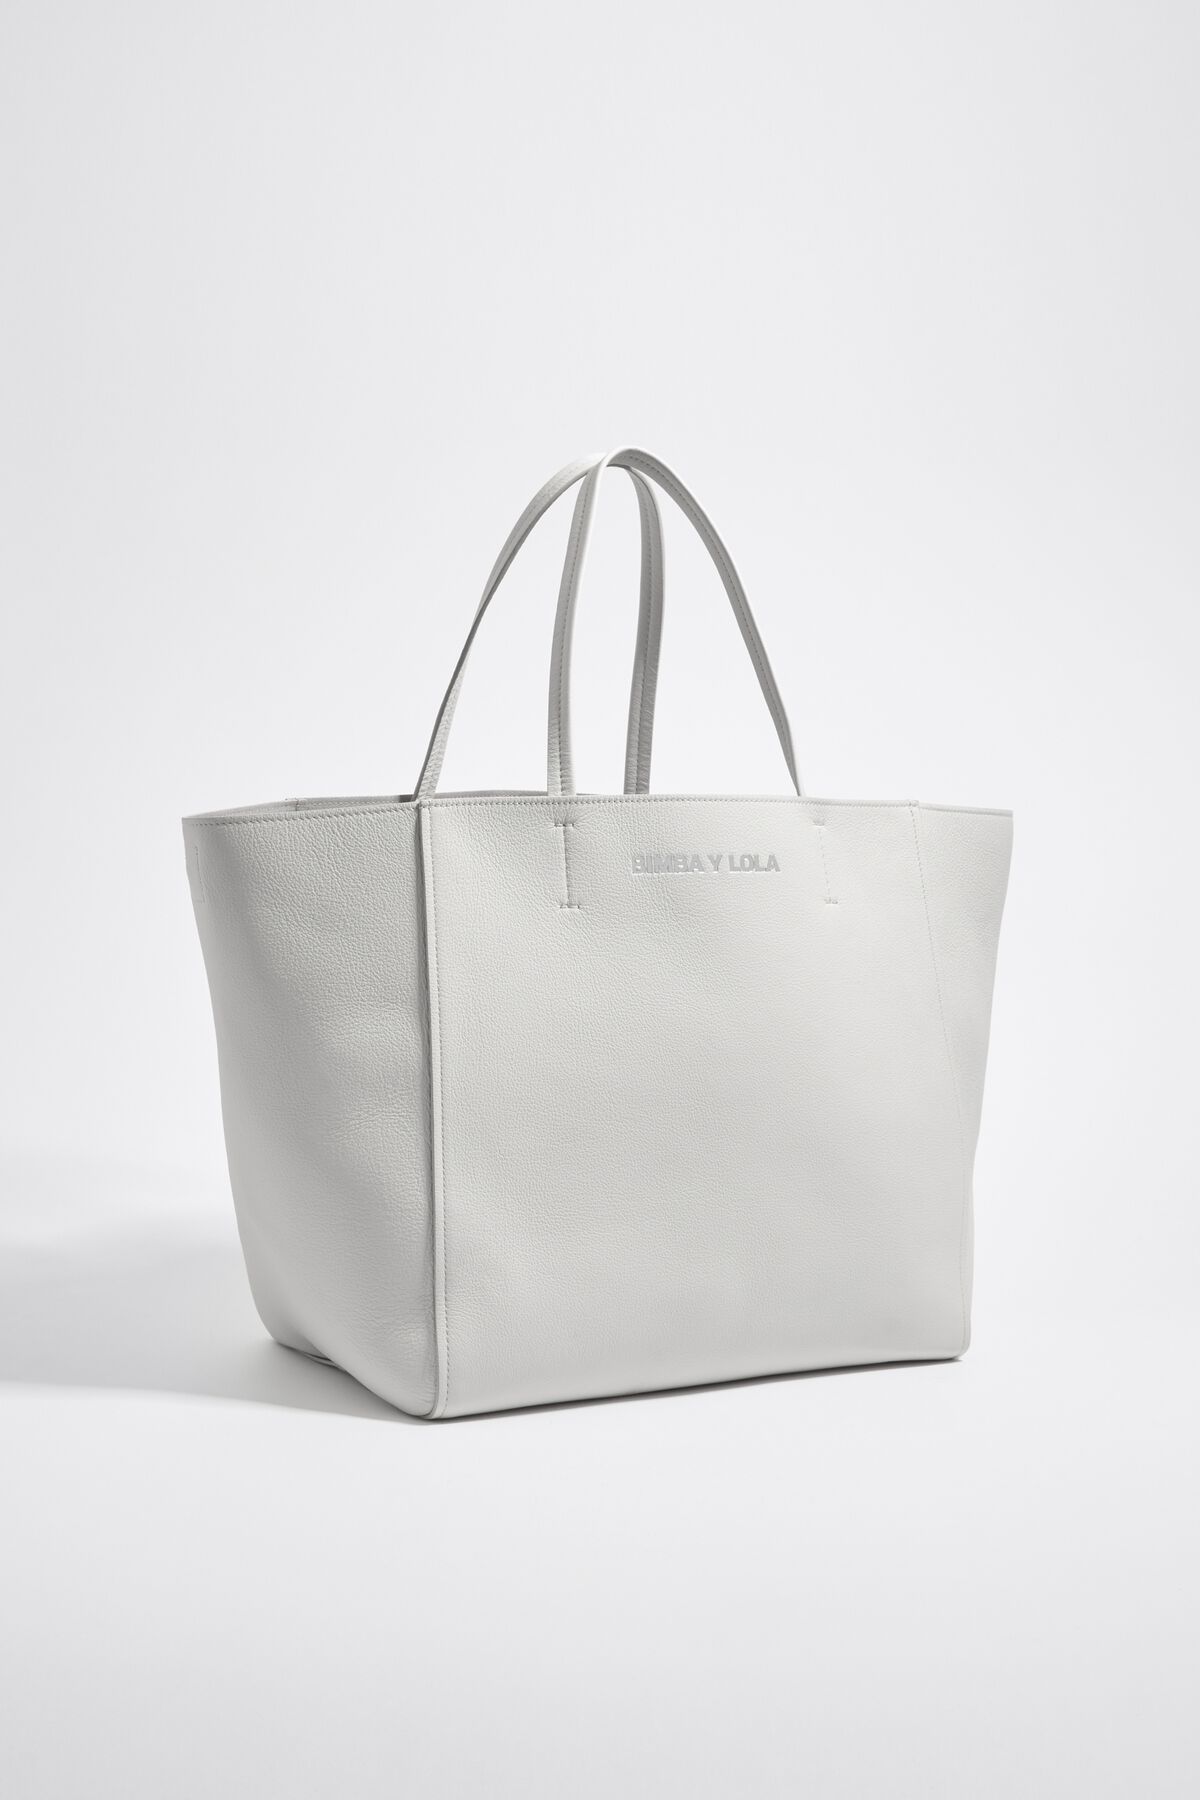 Bimba Y Lola logo-print Leather Sling Bag White